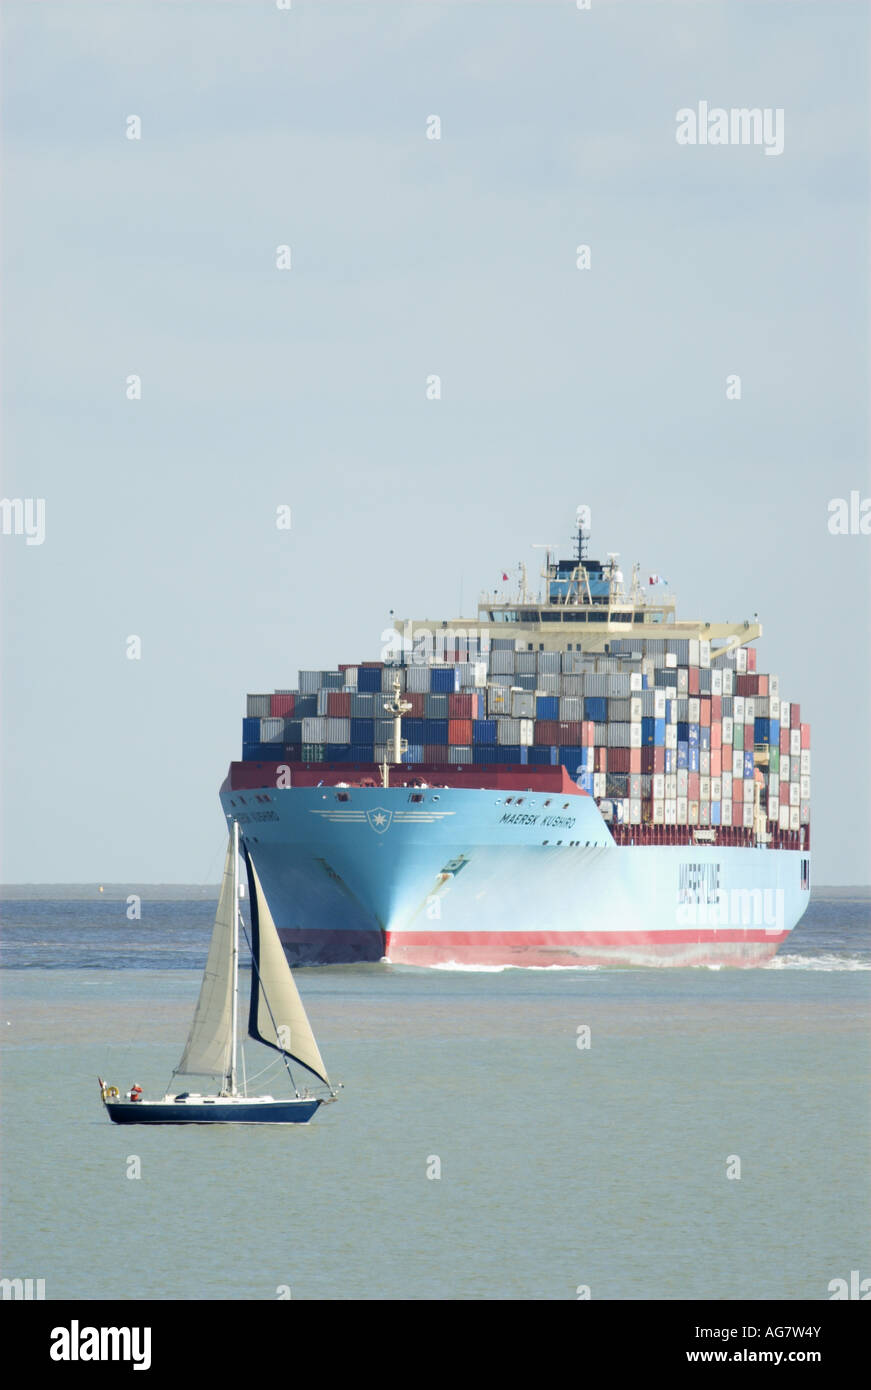 Pequeña embarcación de vela fotografías e imágenes de alta resolución -  Alamy